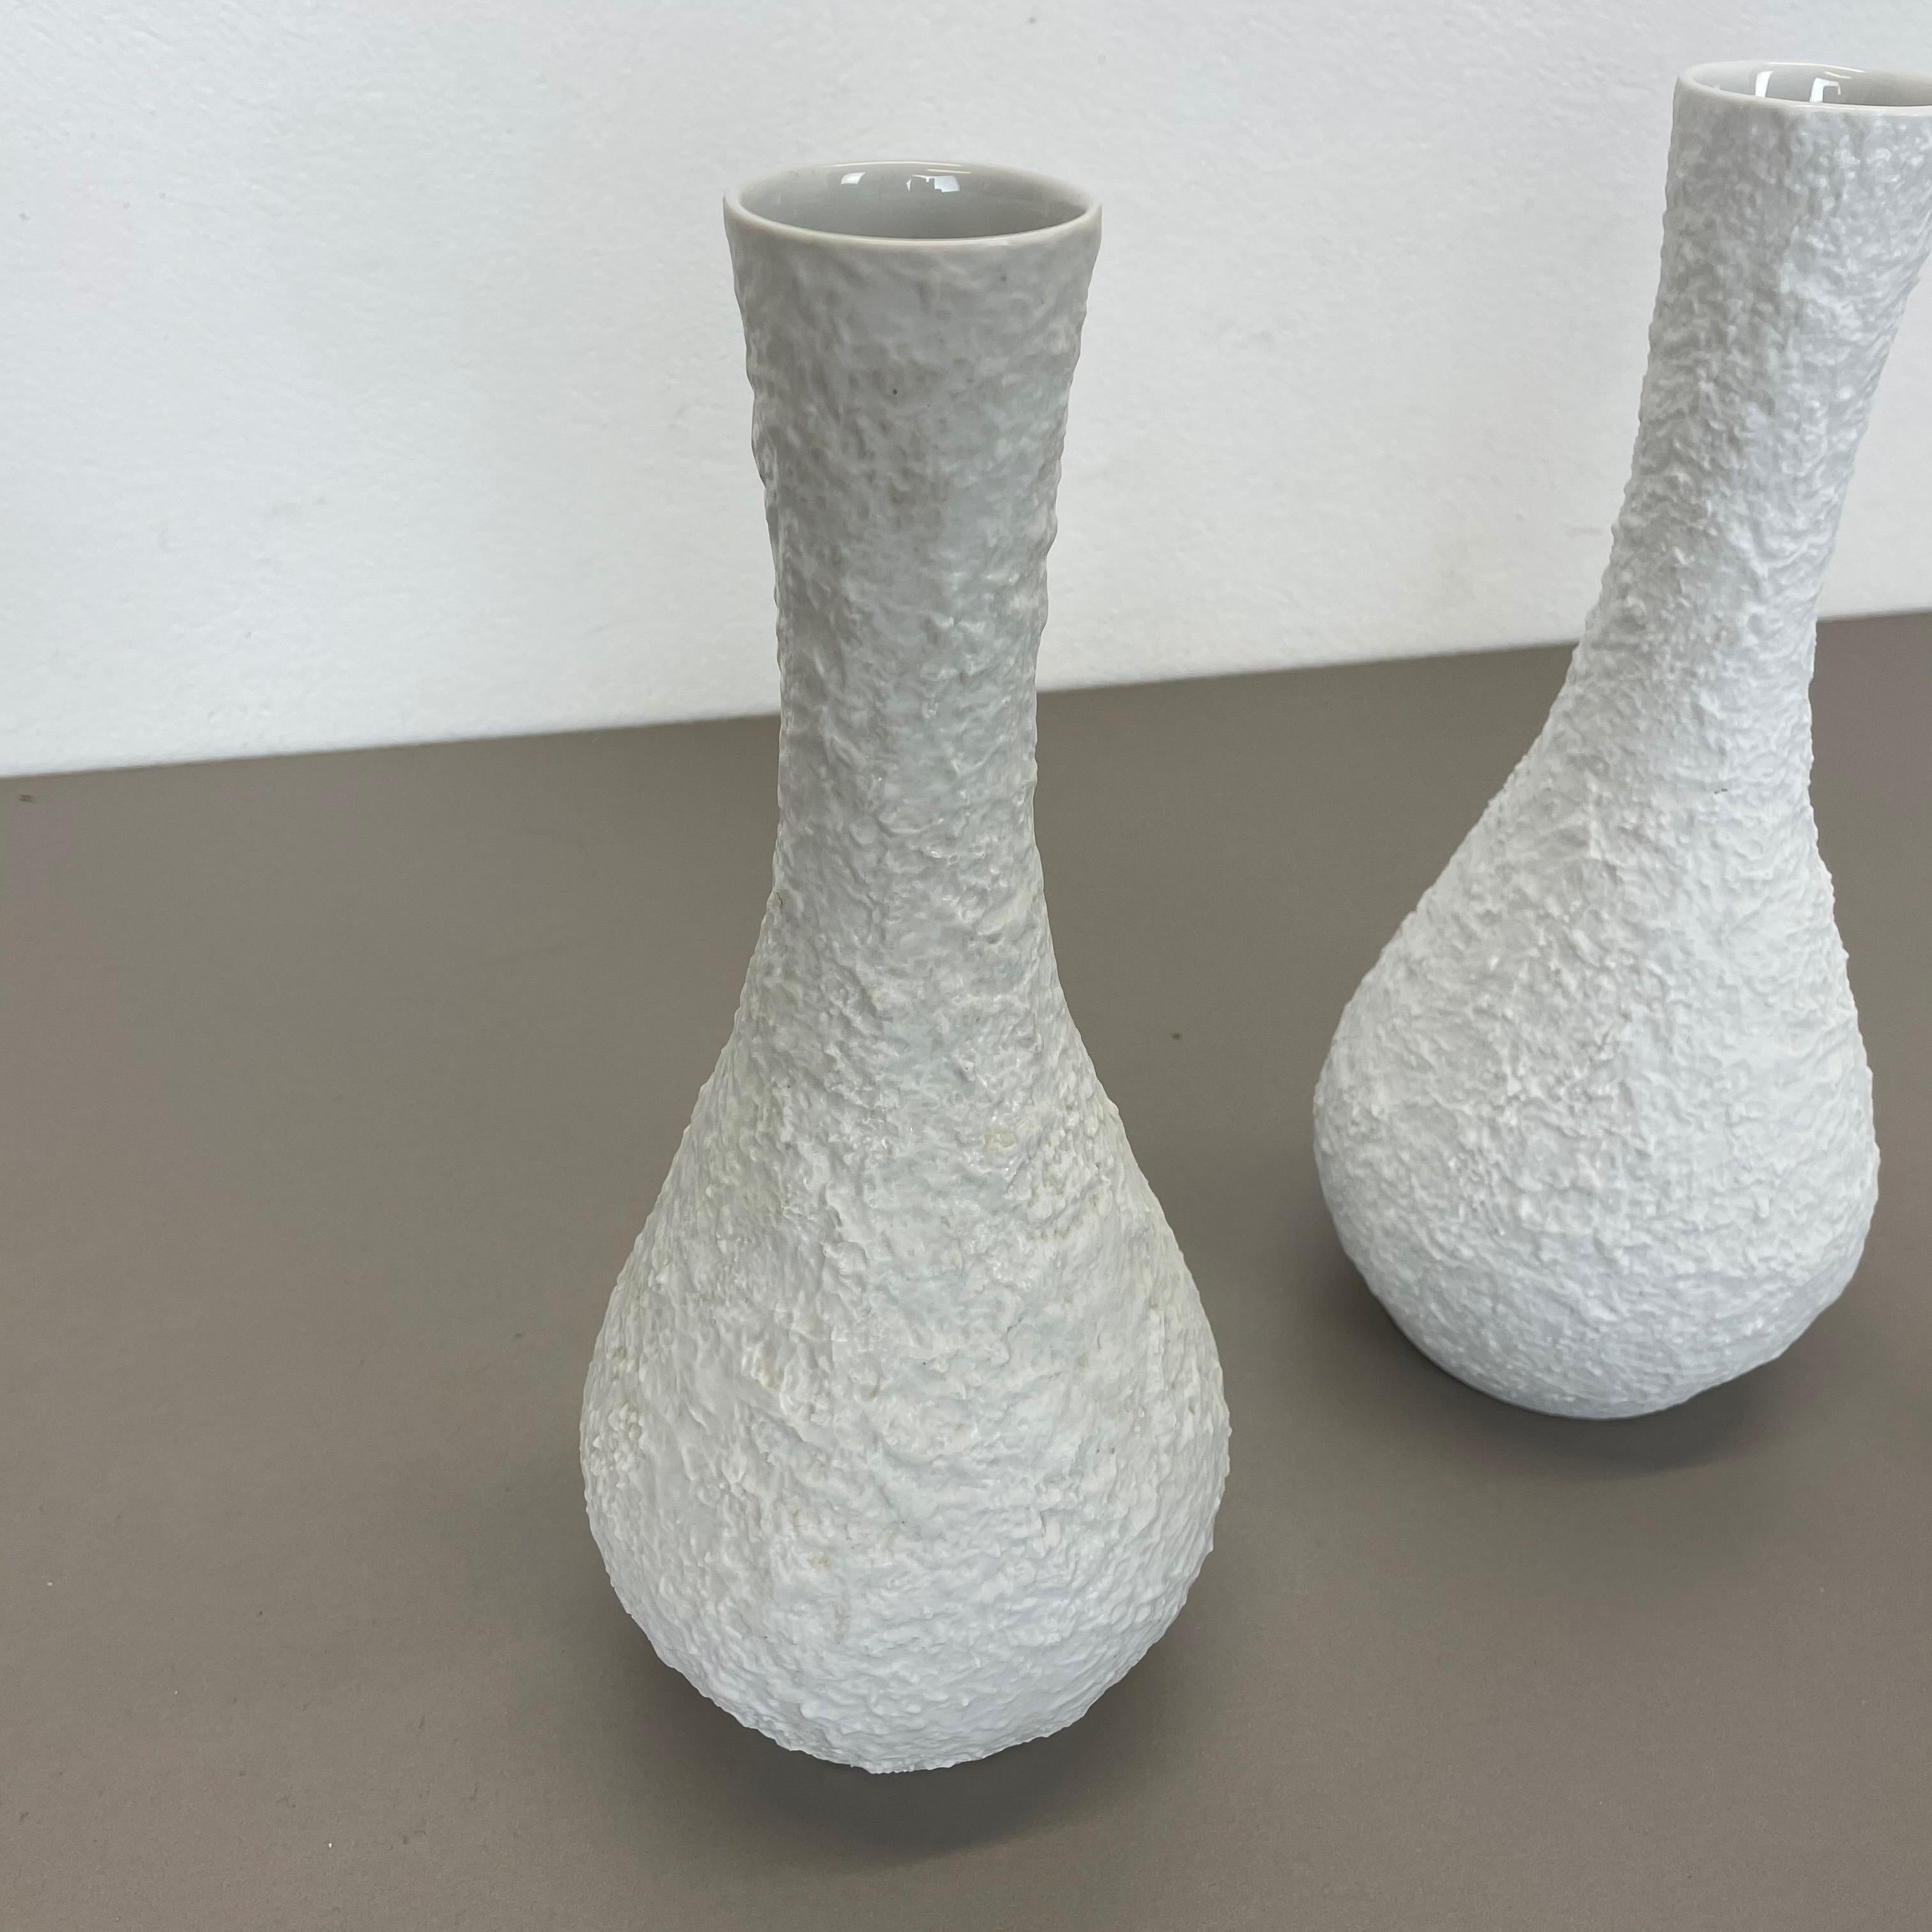 Set of 3 OP Art Biscuit Porcelain Vases by Edelstein Bavaria, Germany, 1970s For Sale 4